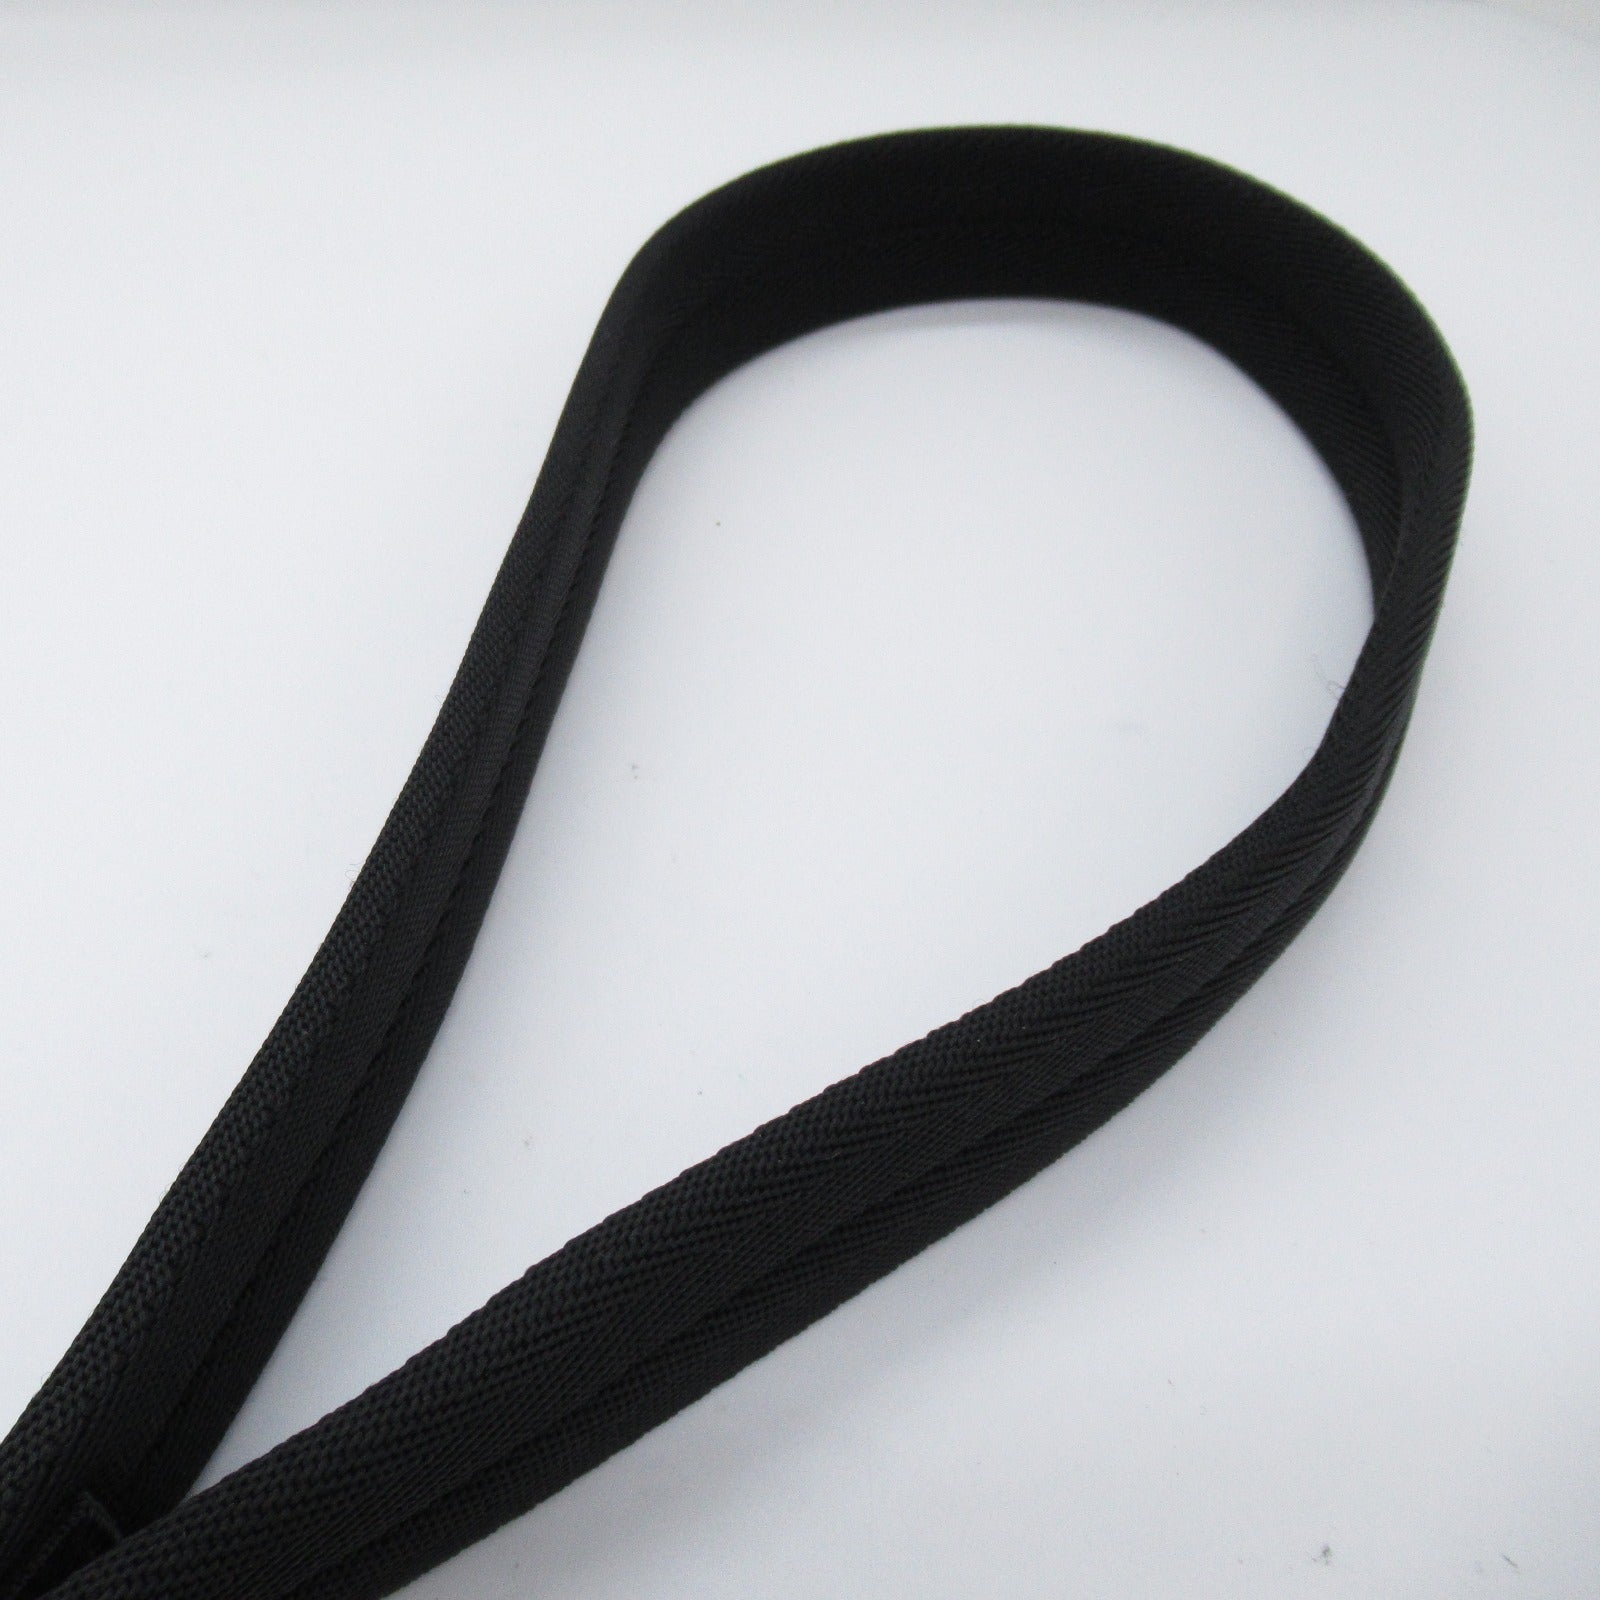 Prada Prada Shoulder Bag Nylon   Black Yellow 2VH043